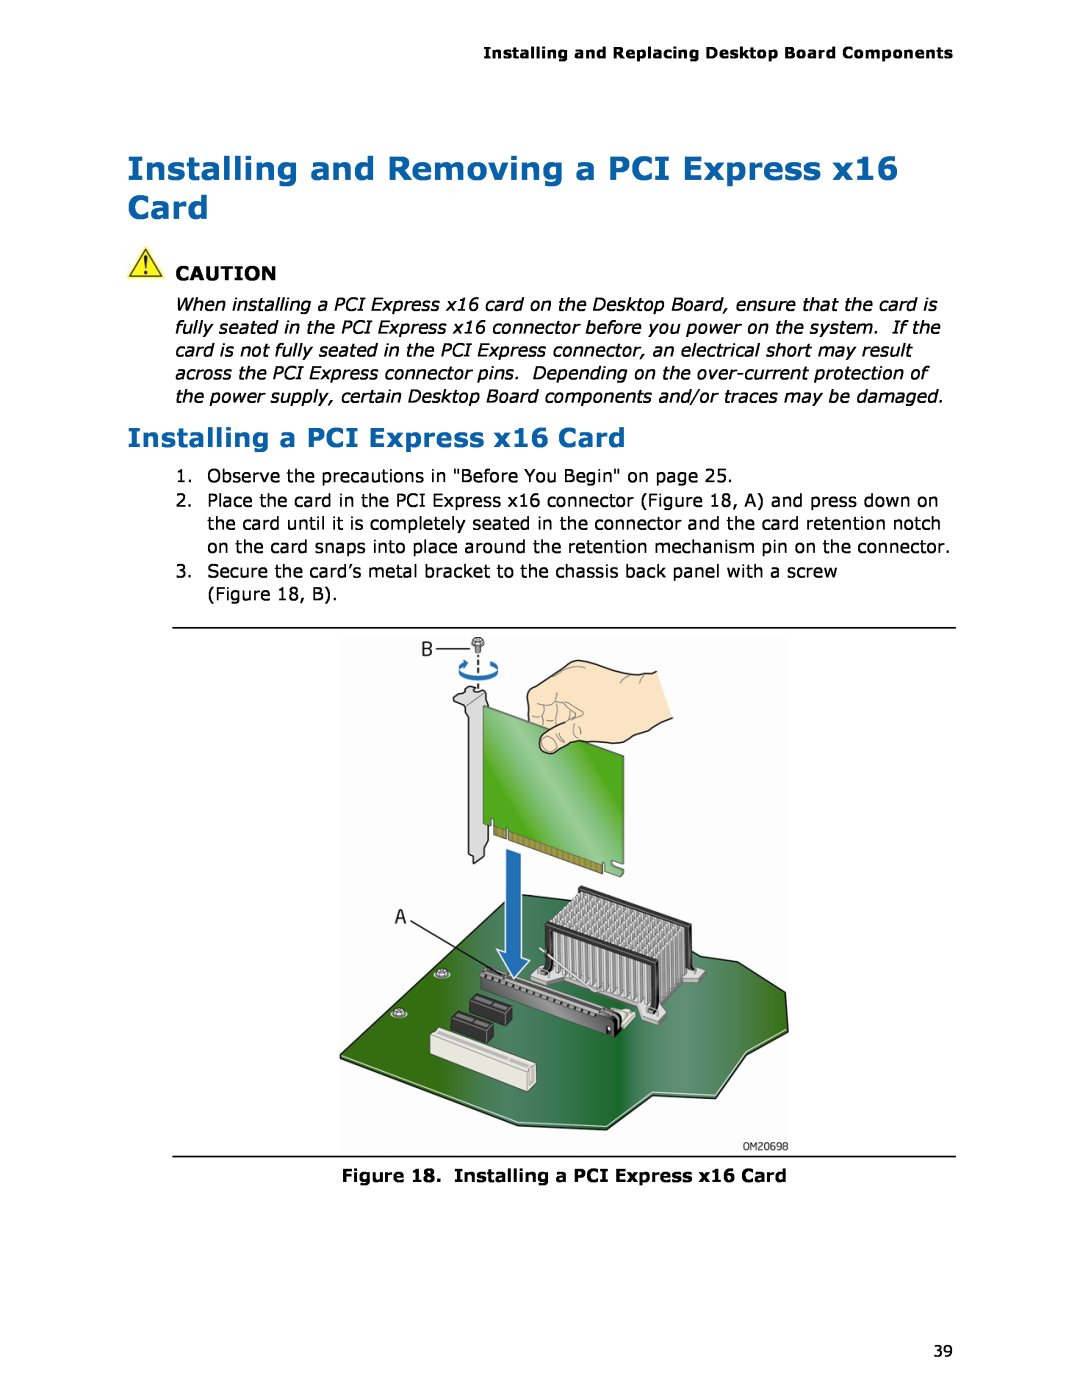 Intel DG35EC, Intel Desktop Board manual Installing and Removing a PCI Express x16 Card, Installing a PCI Express x16 Card 